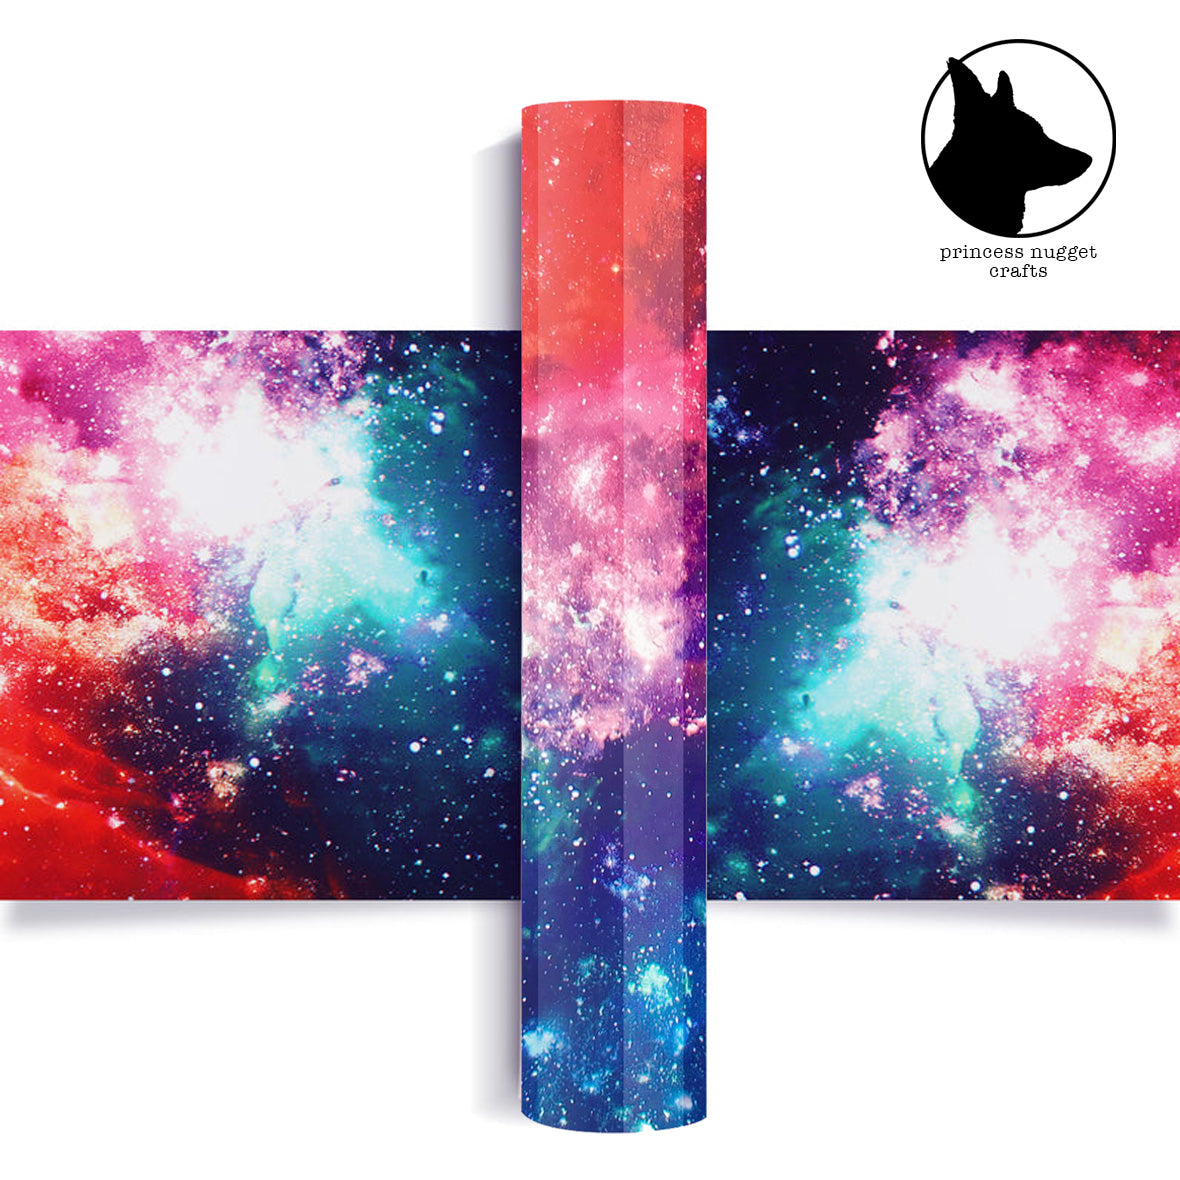 FLEX Galaxy Nebula Purple - Princess Nugget crafts